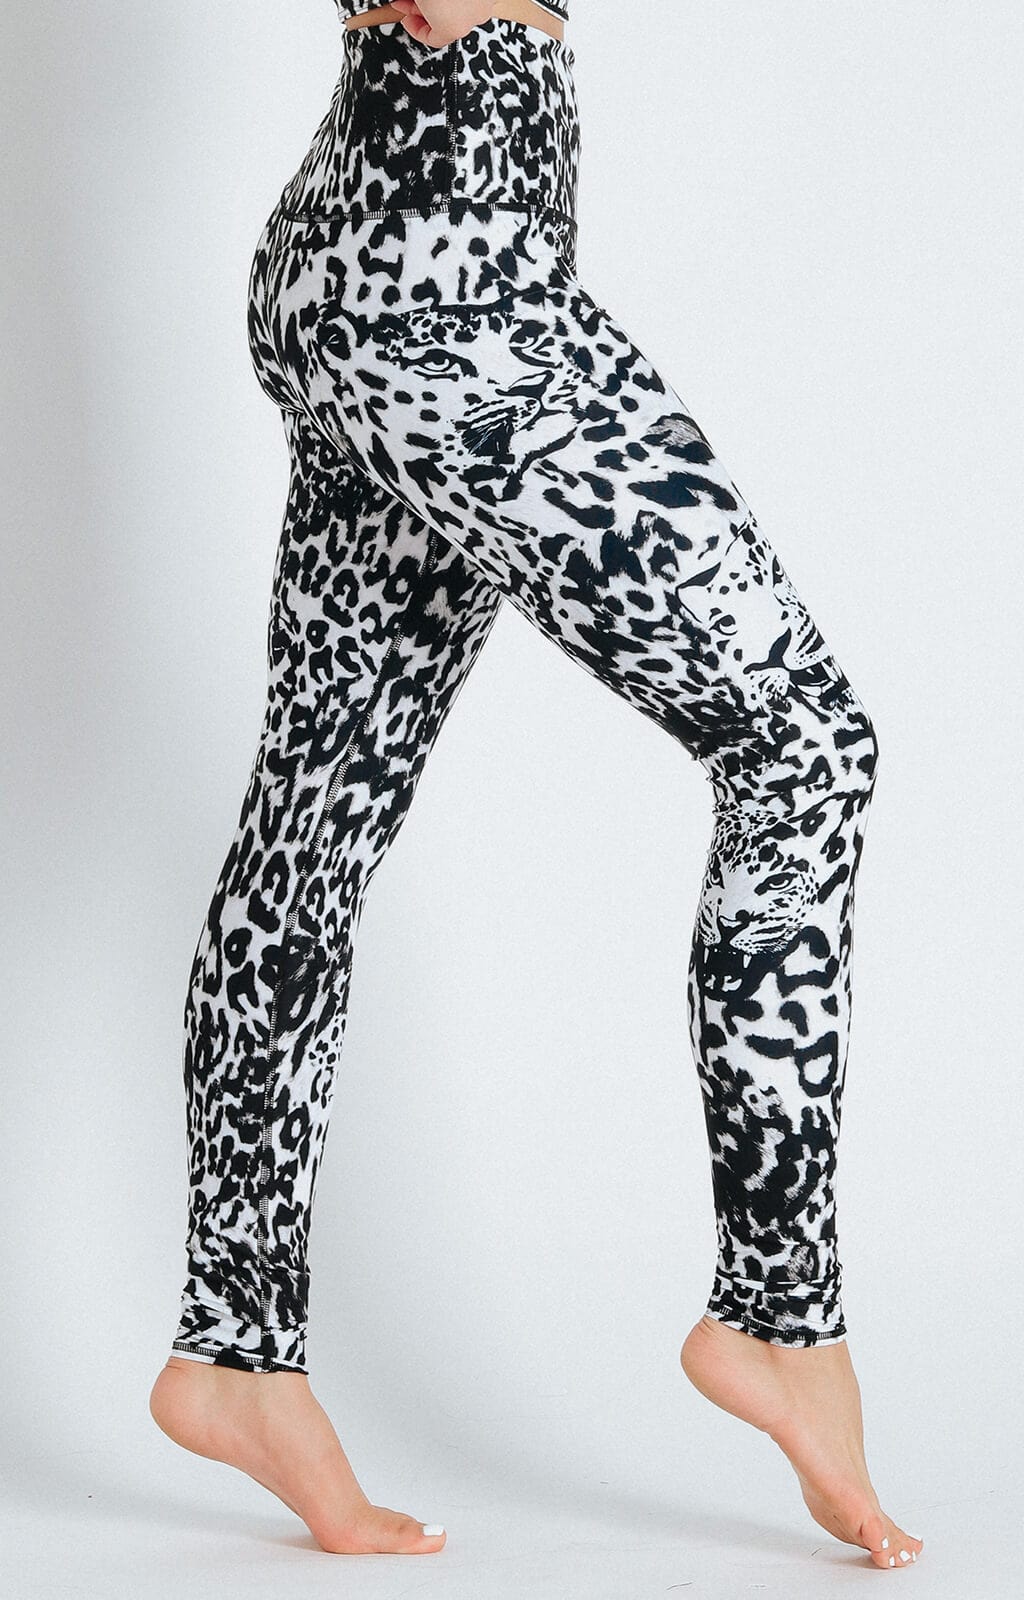 Lonsdale London Alston 7/8 Cheetah Print Leggings | Target Australia